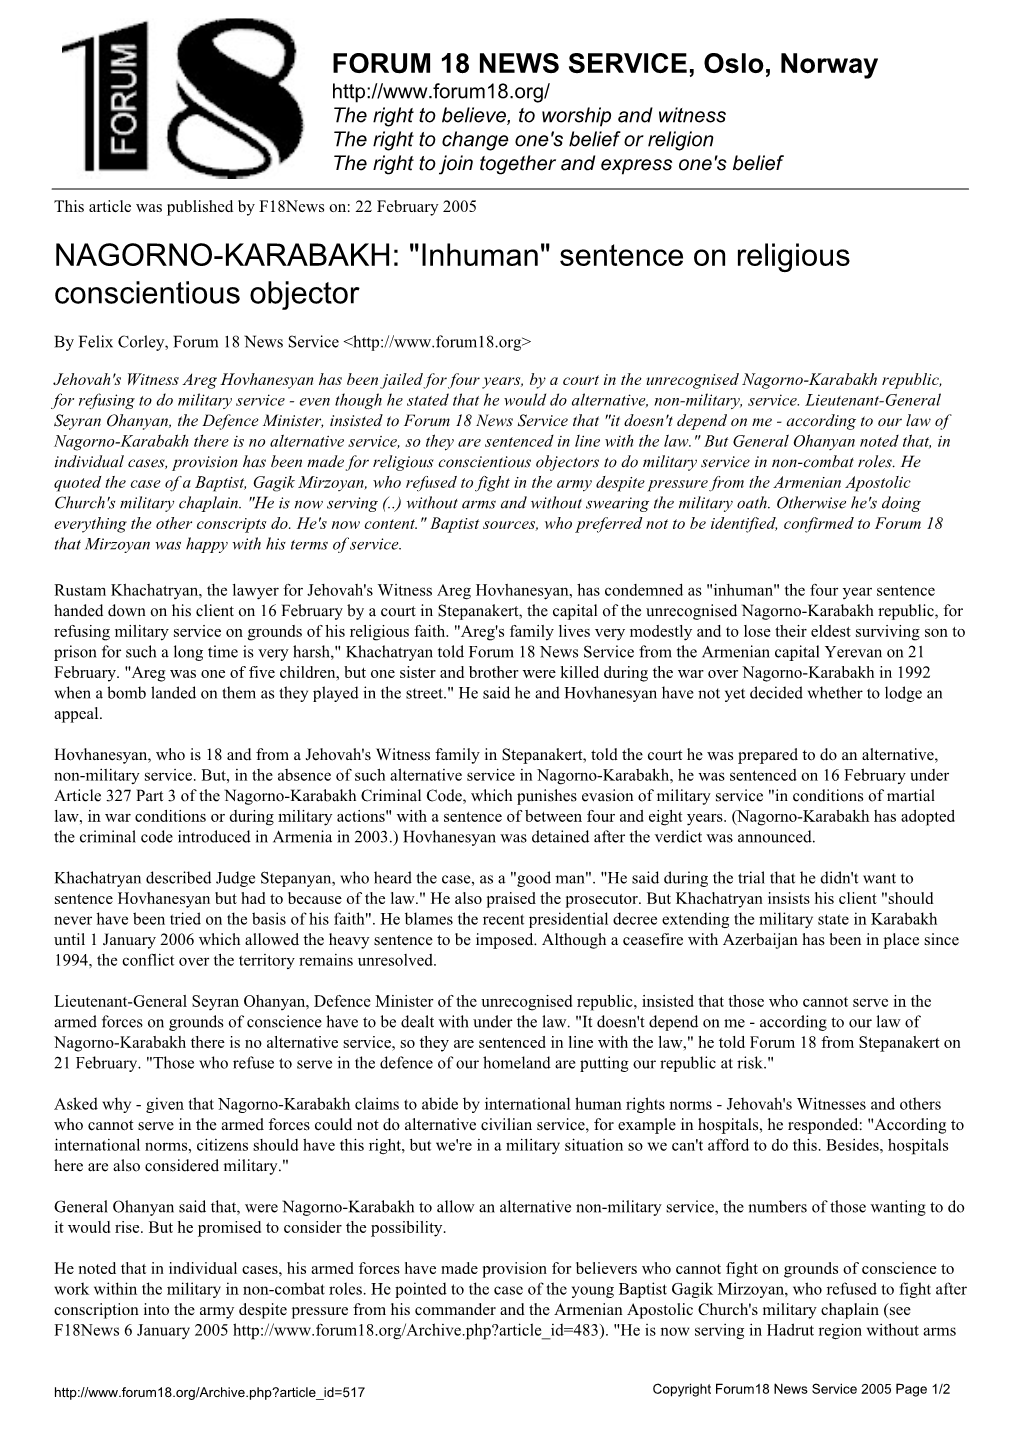 NAGORNO-KARABAKH: "Inhuman" Sentence on Religious Conscientious Objector